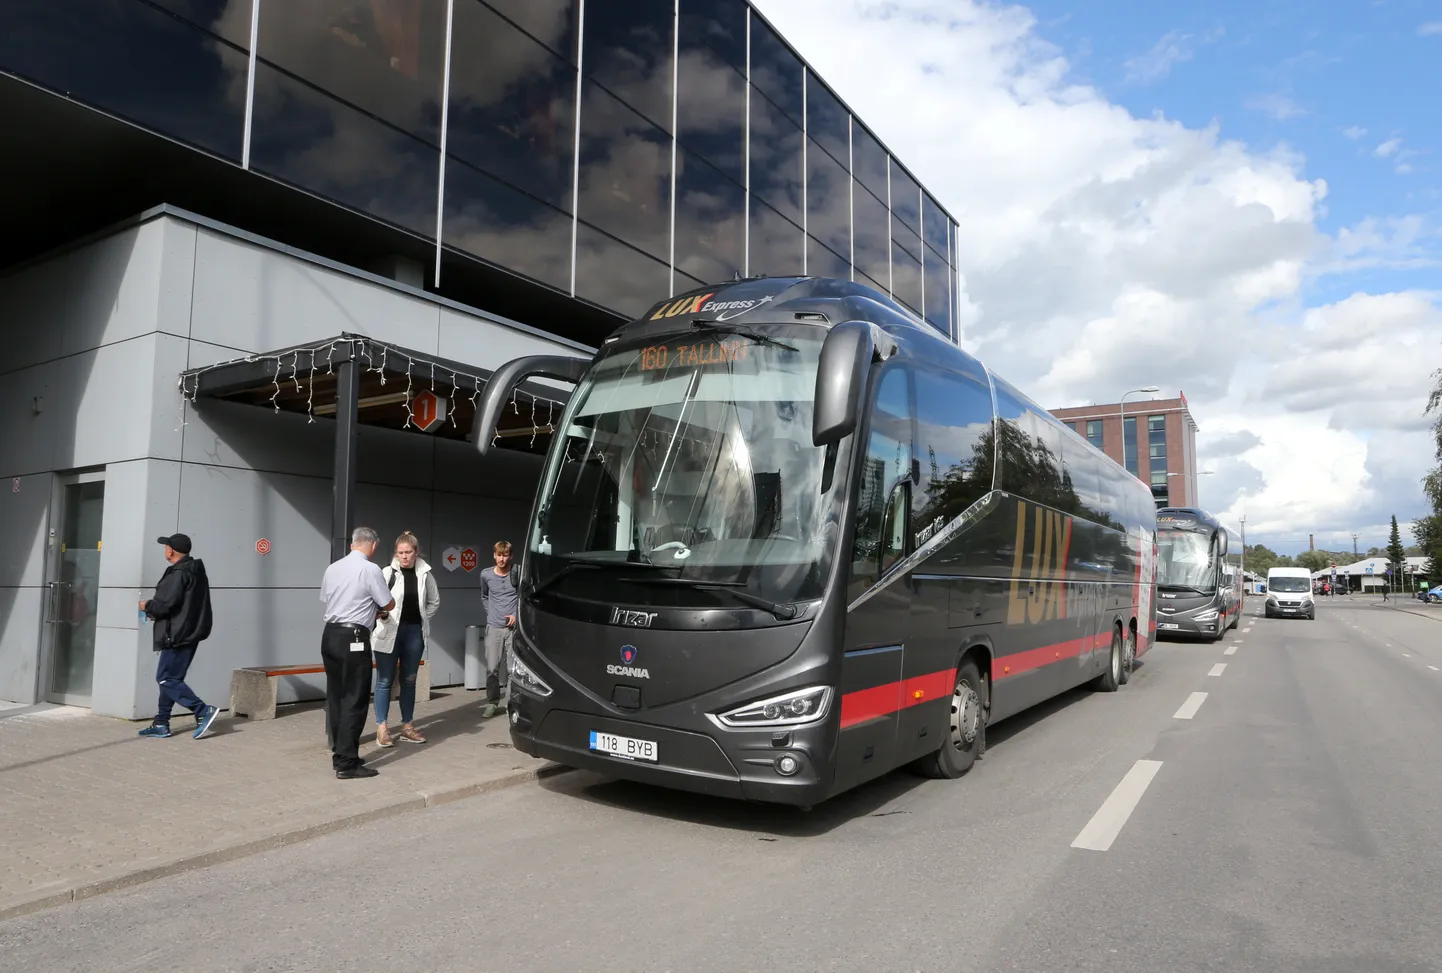 Lux Expressi buss Tartu bussijaamas.
Foto: SILLE ANNUK / TARTU POSTIMEES